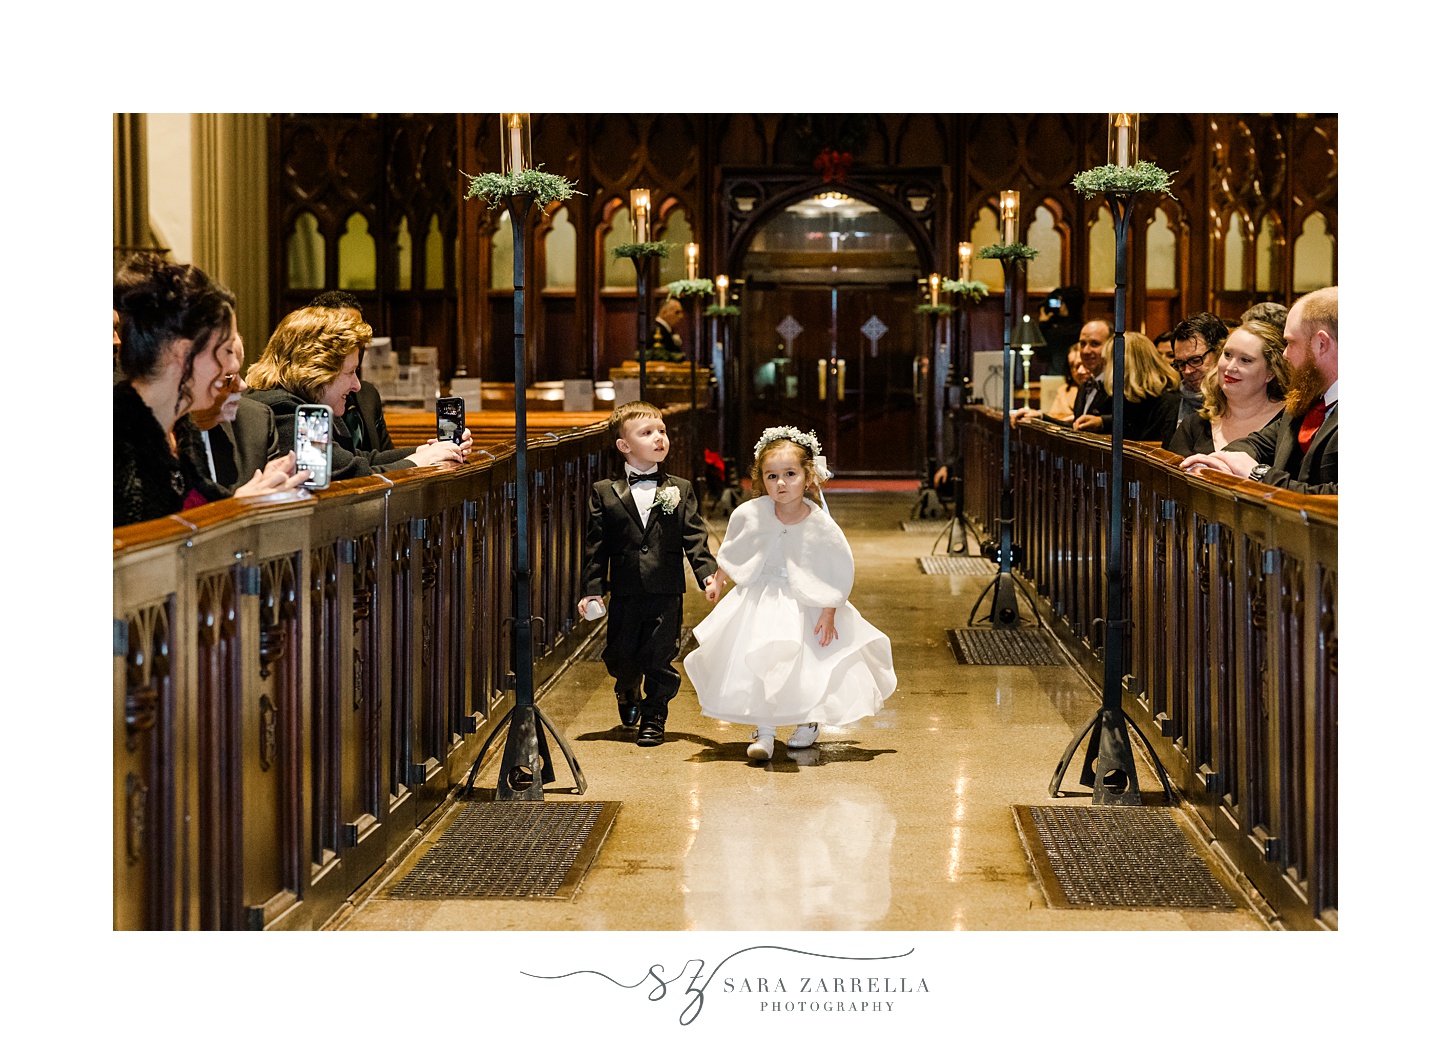 flower girl and ring bearer walks down aisle for traditional church wedding in Providence RI